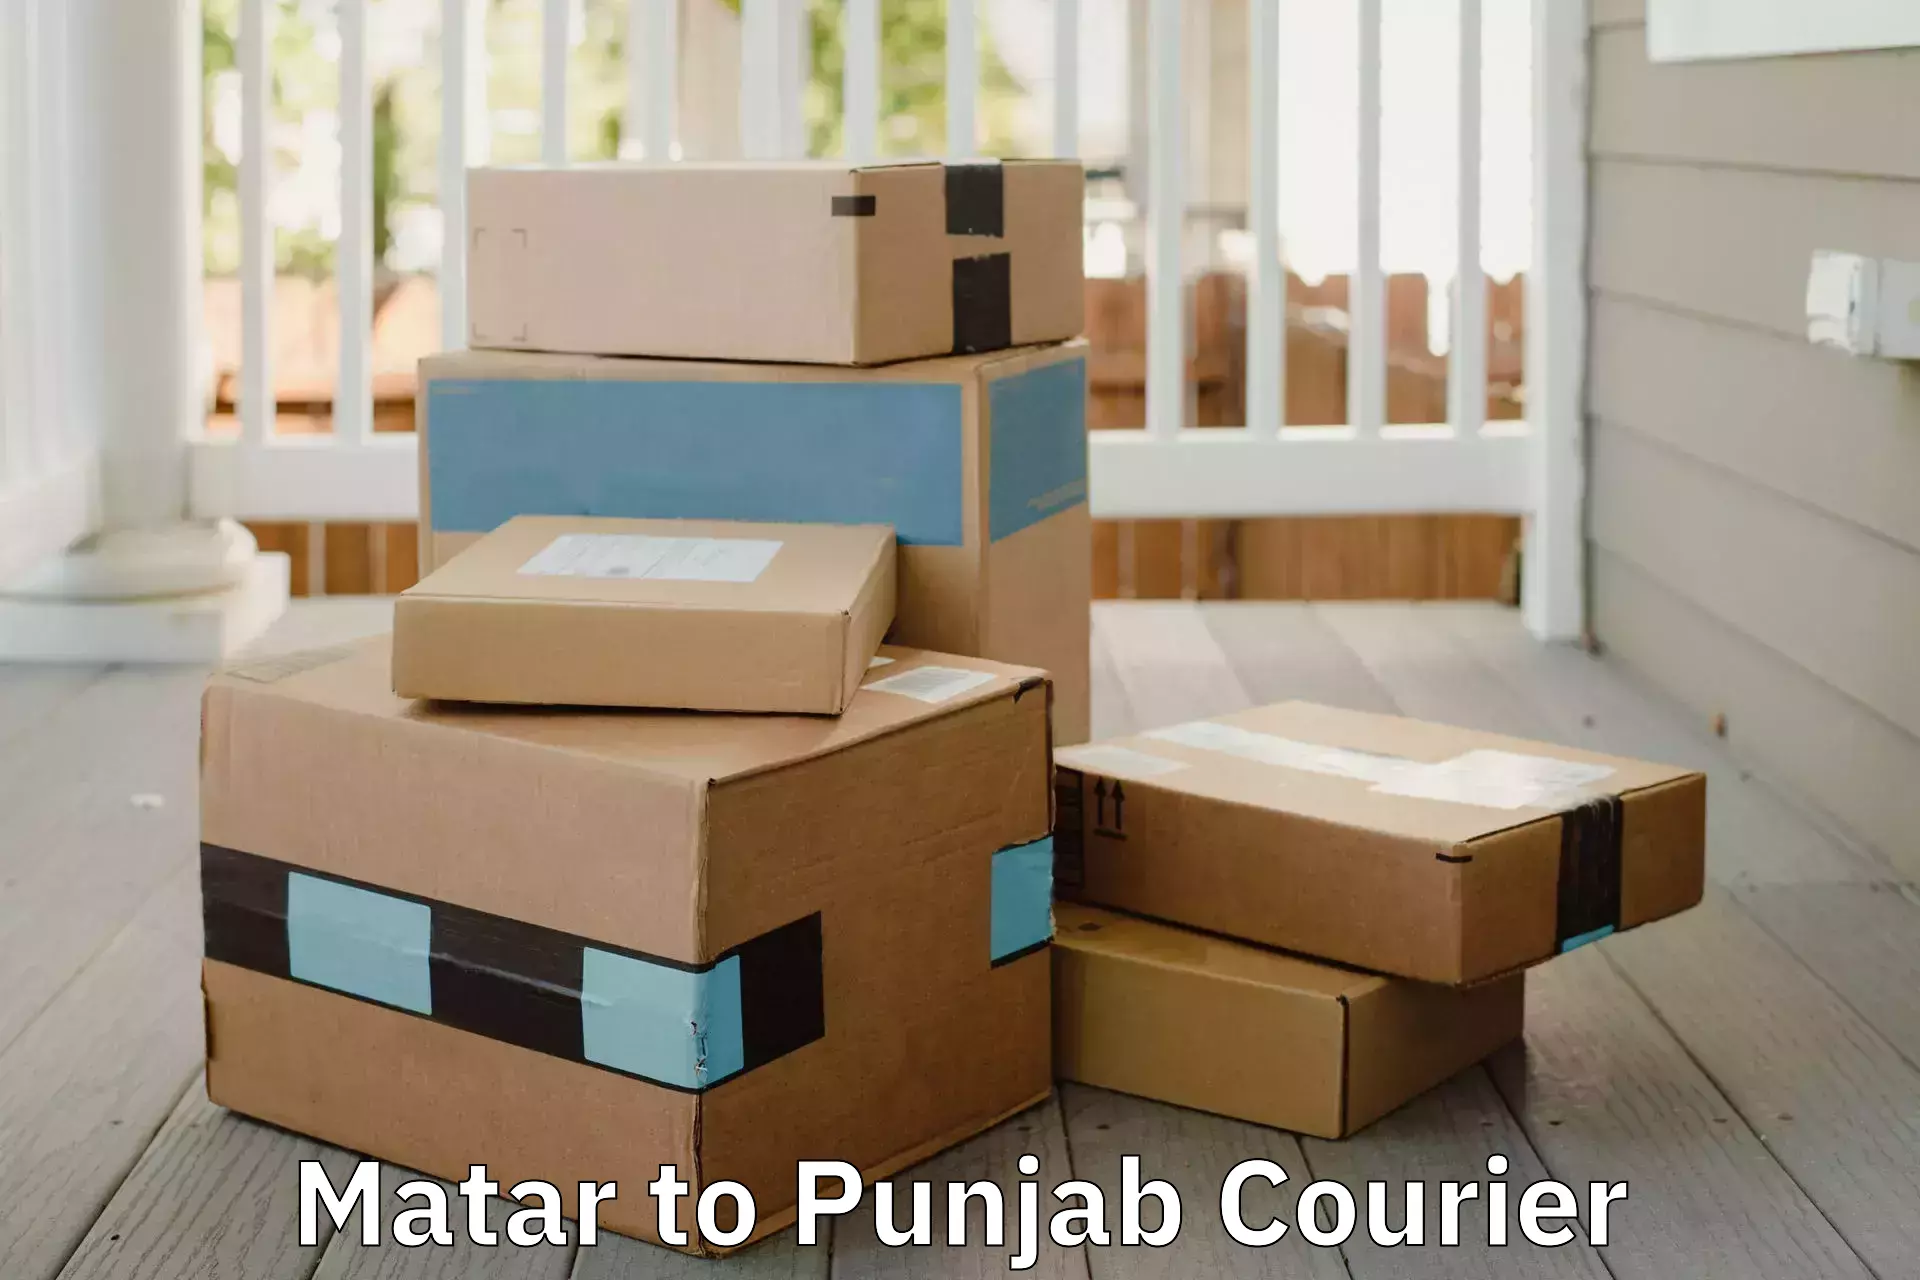 Furniture relocation experts Matar to Punjab